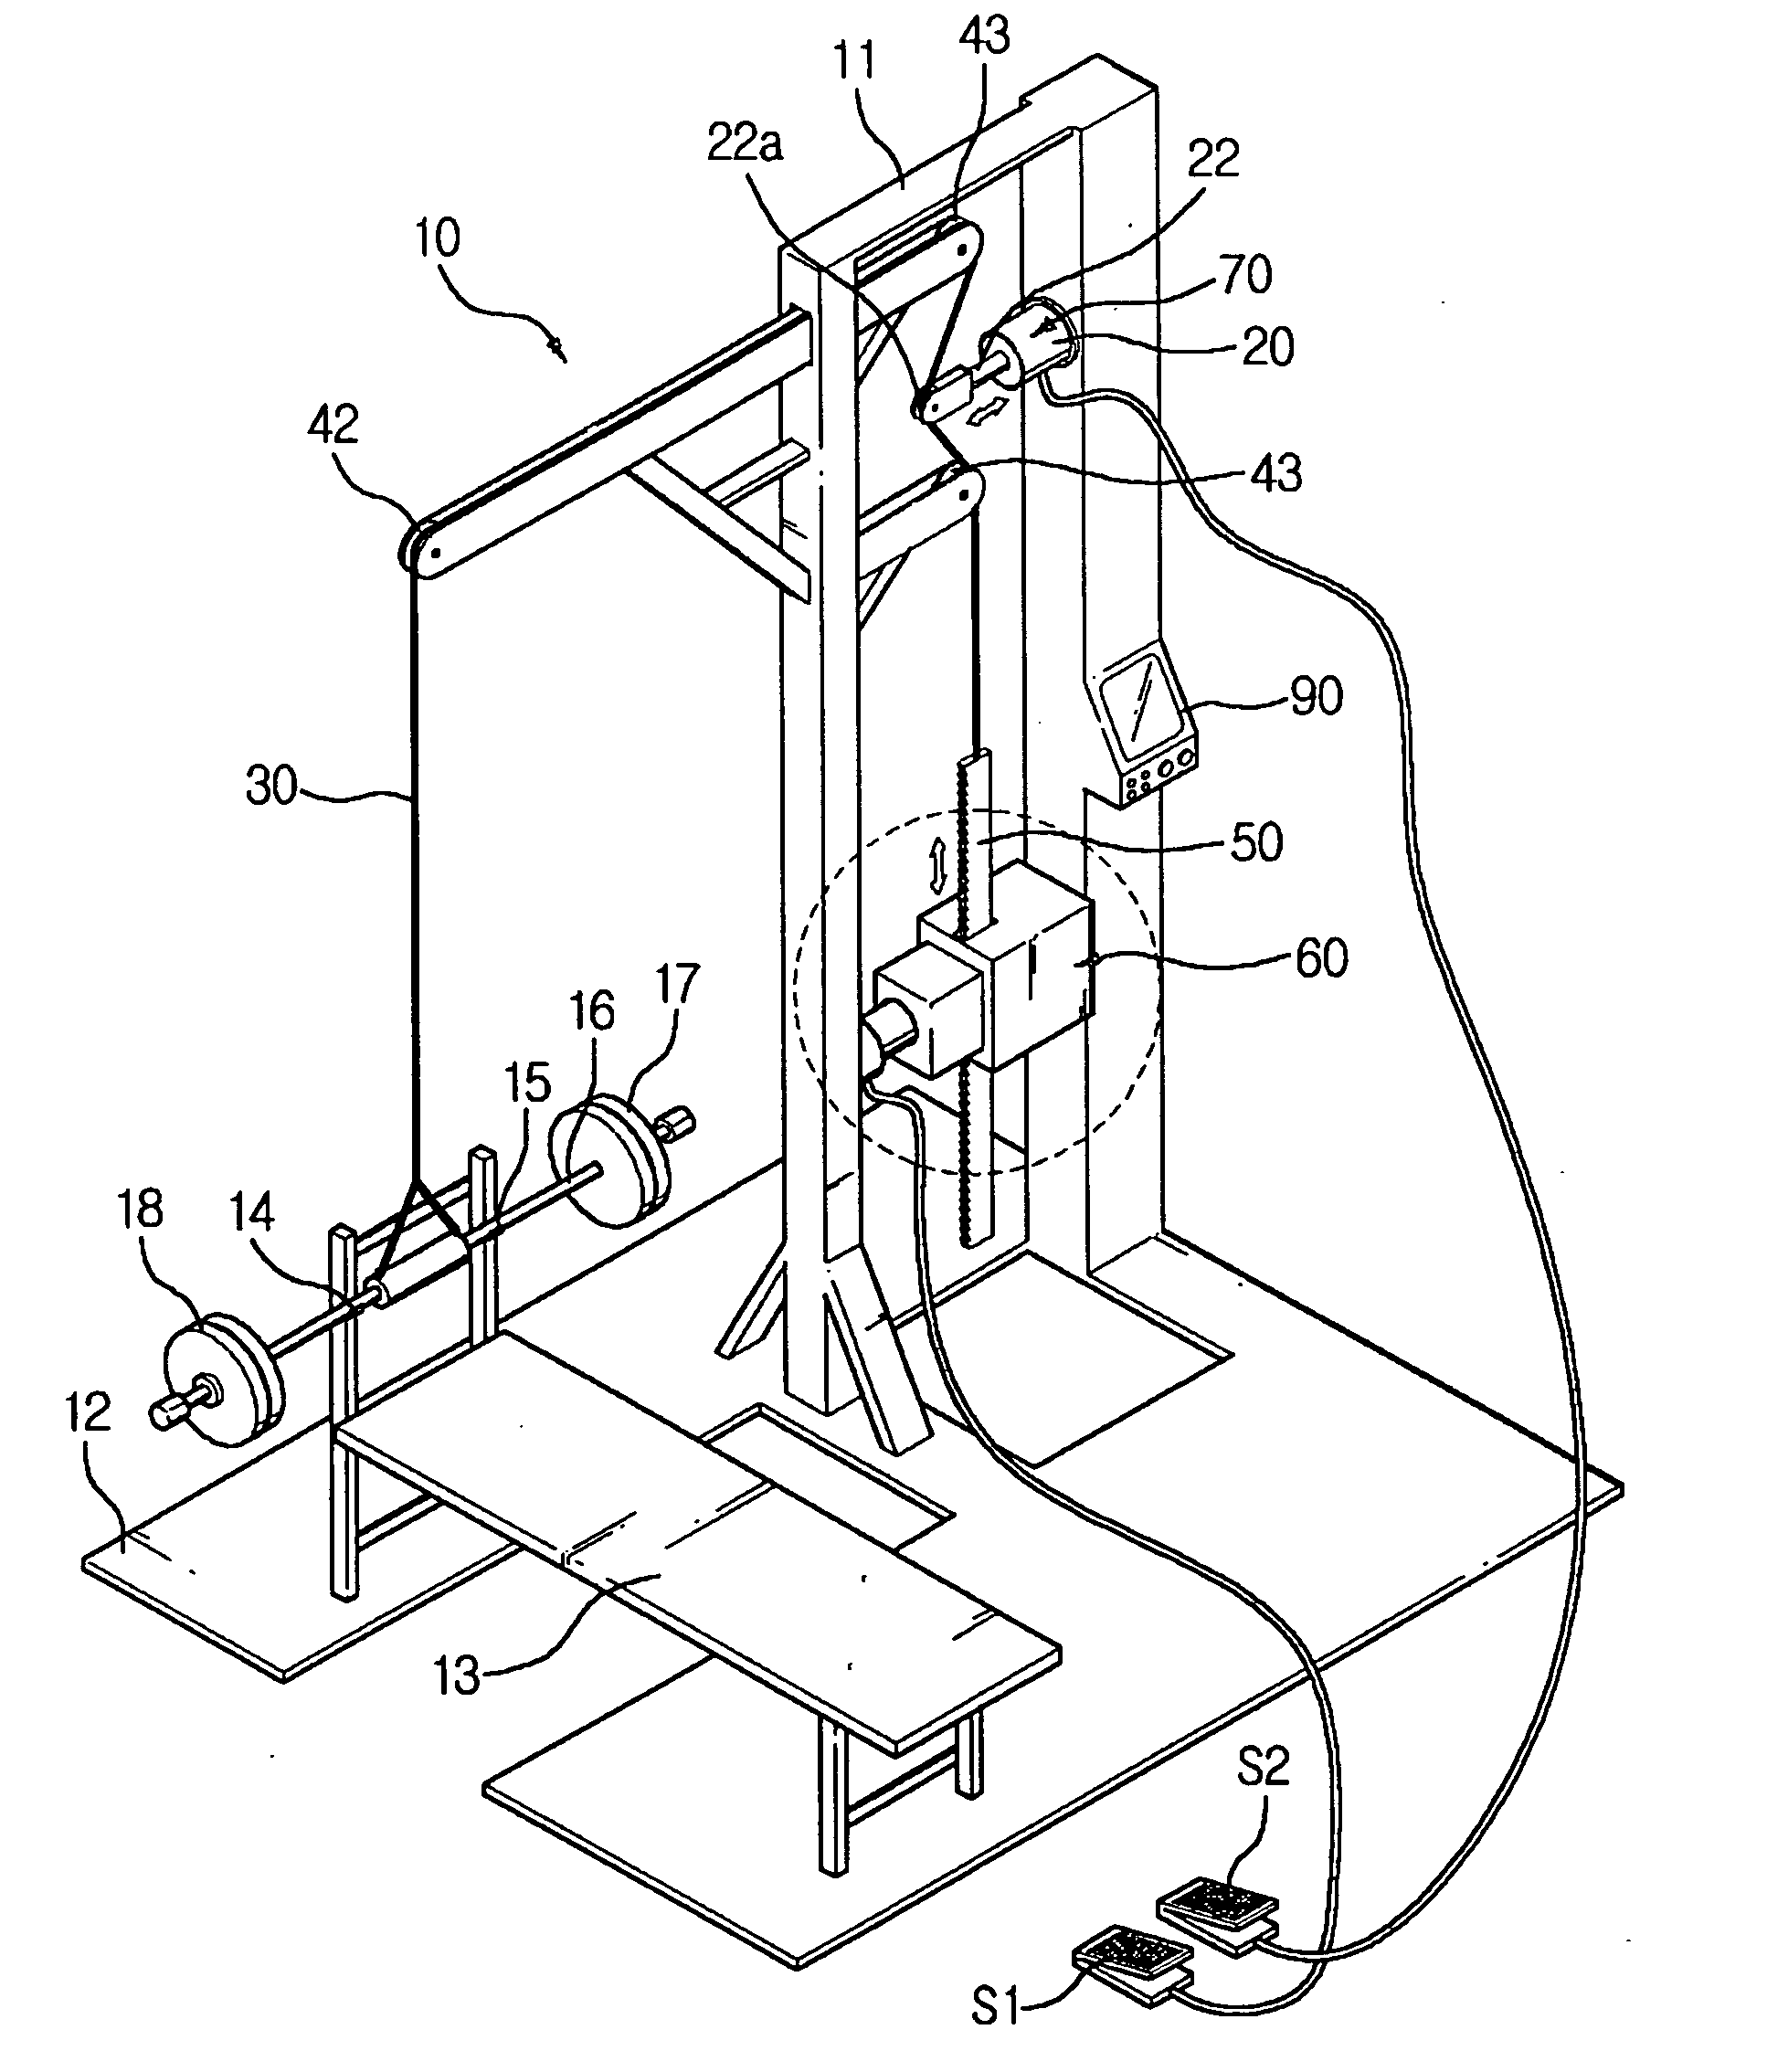 Bench press apparatus